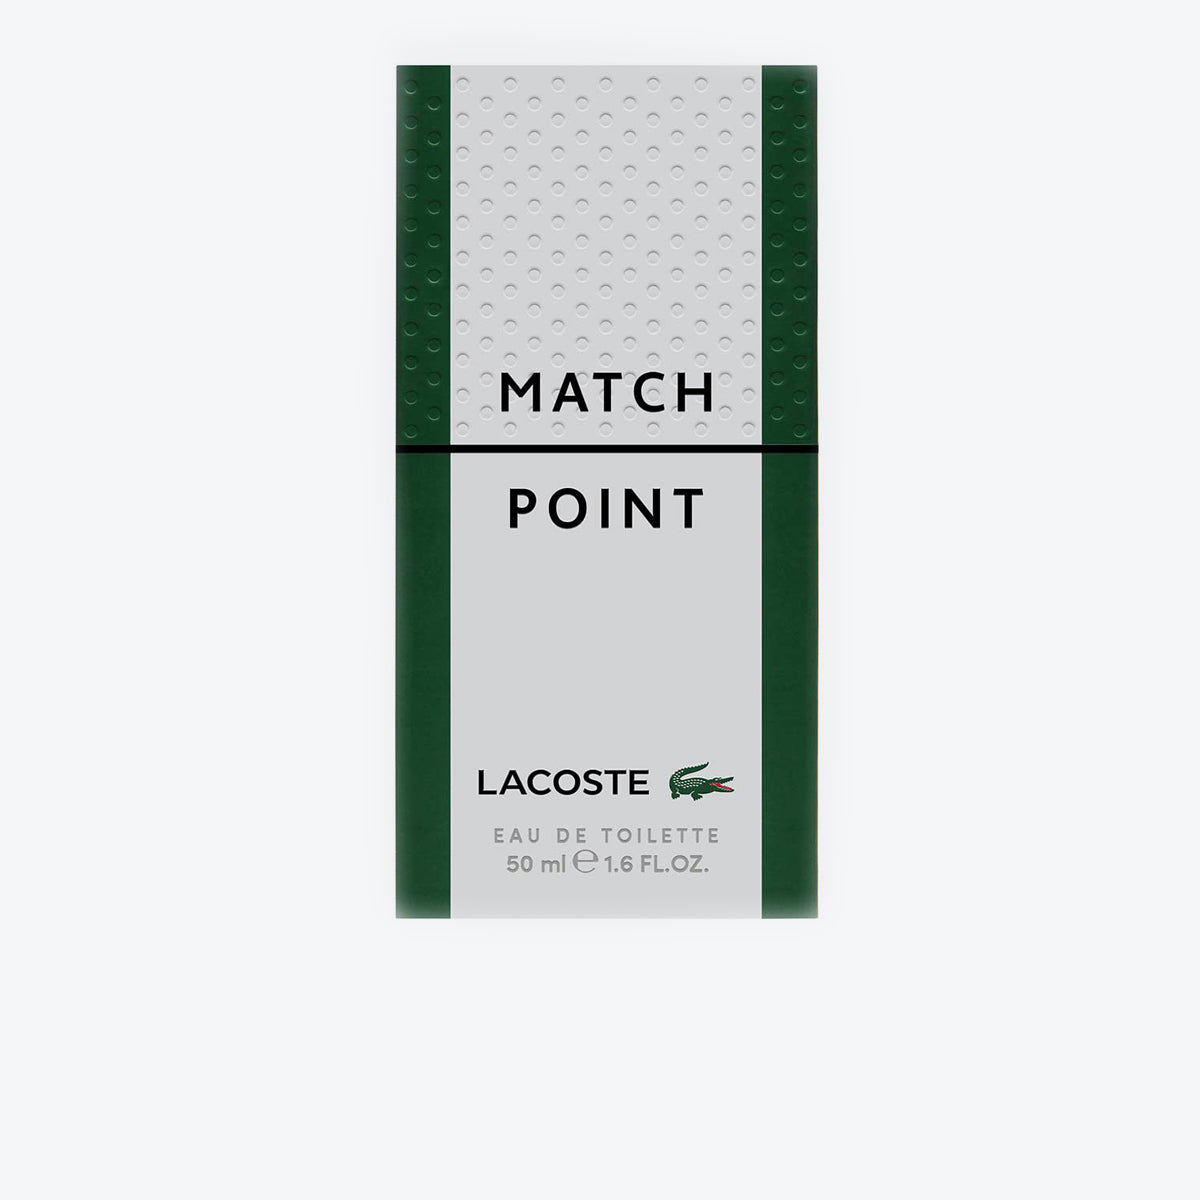 Lacoste Match Point 50ml EDT 50ml